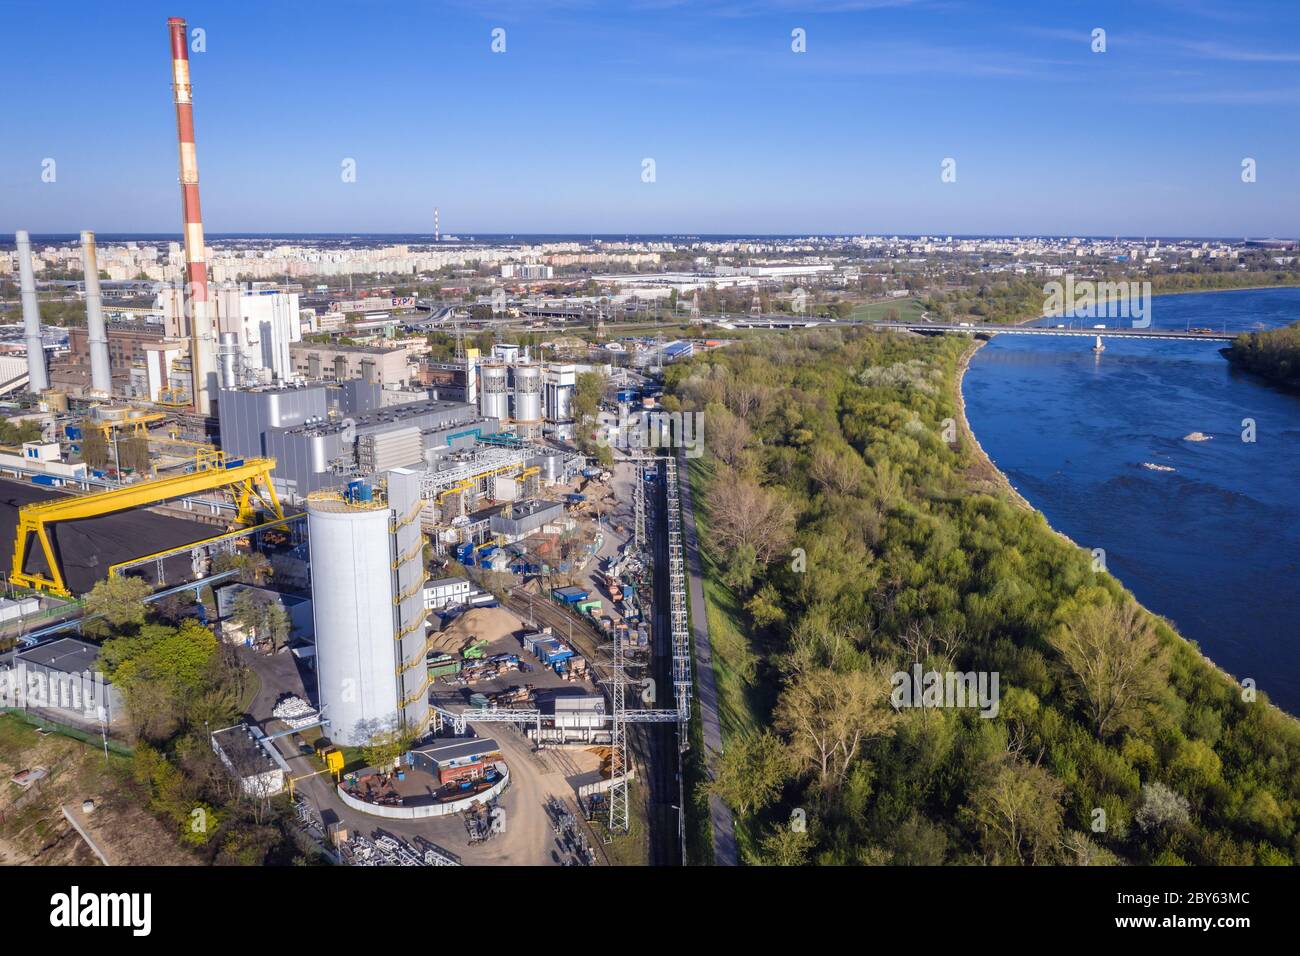 Aerial view of Elektrocieplownia Zeran, coal fired heat power station in Warsaw, Poland Stock Photo